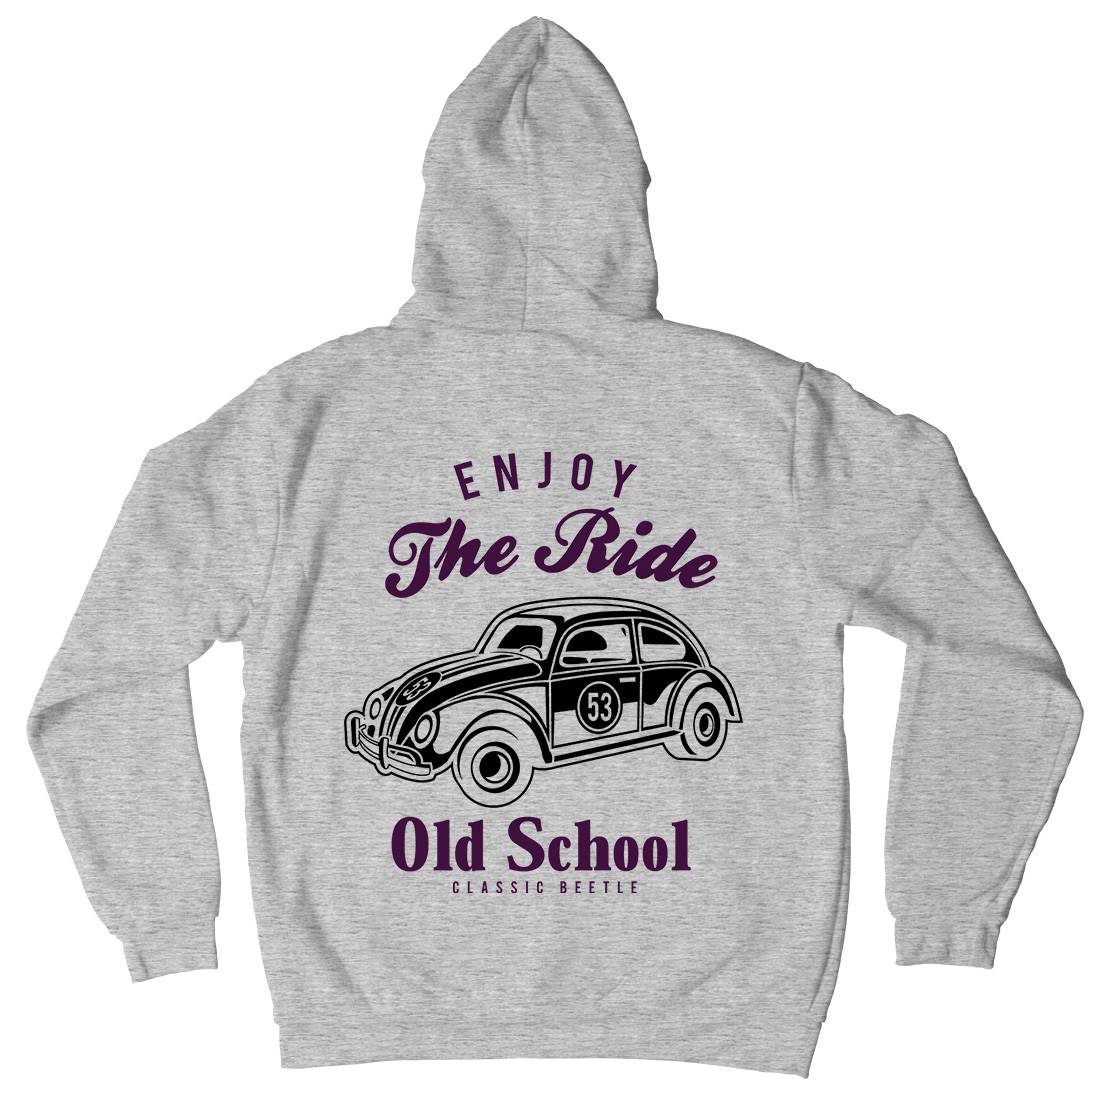 Enjoy The Ride Kids Crew Neck Hoodie Cars A047